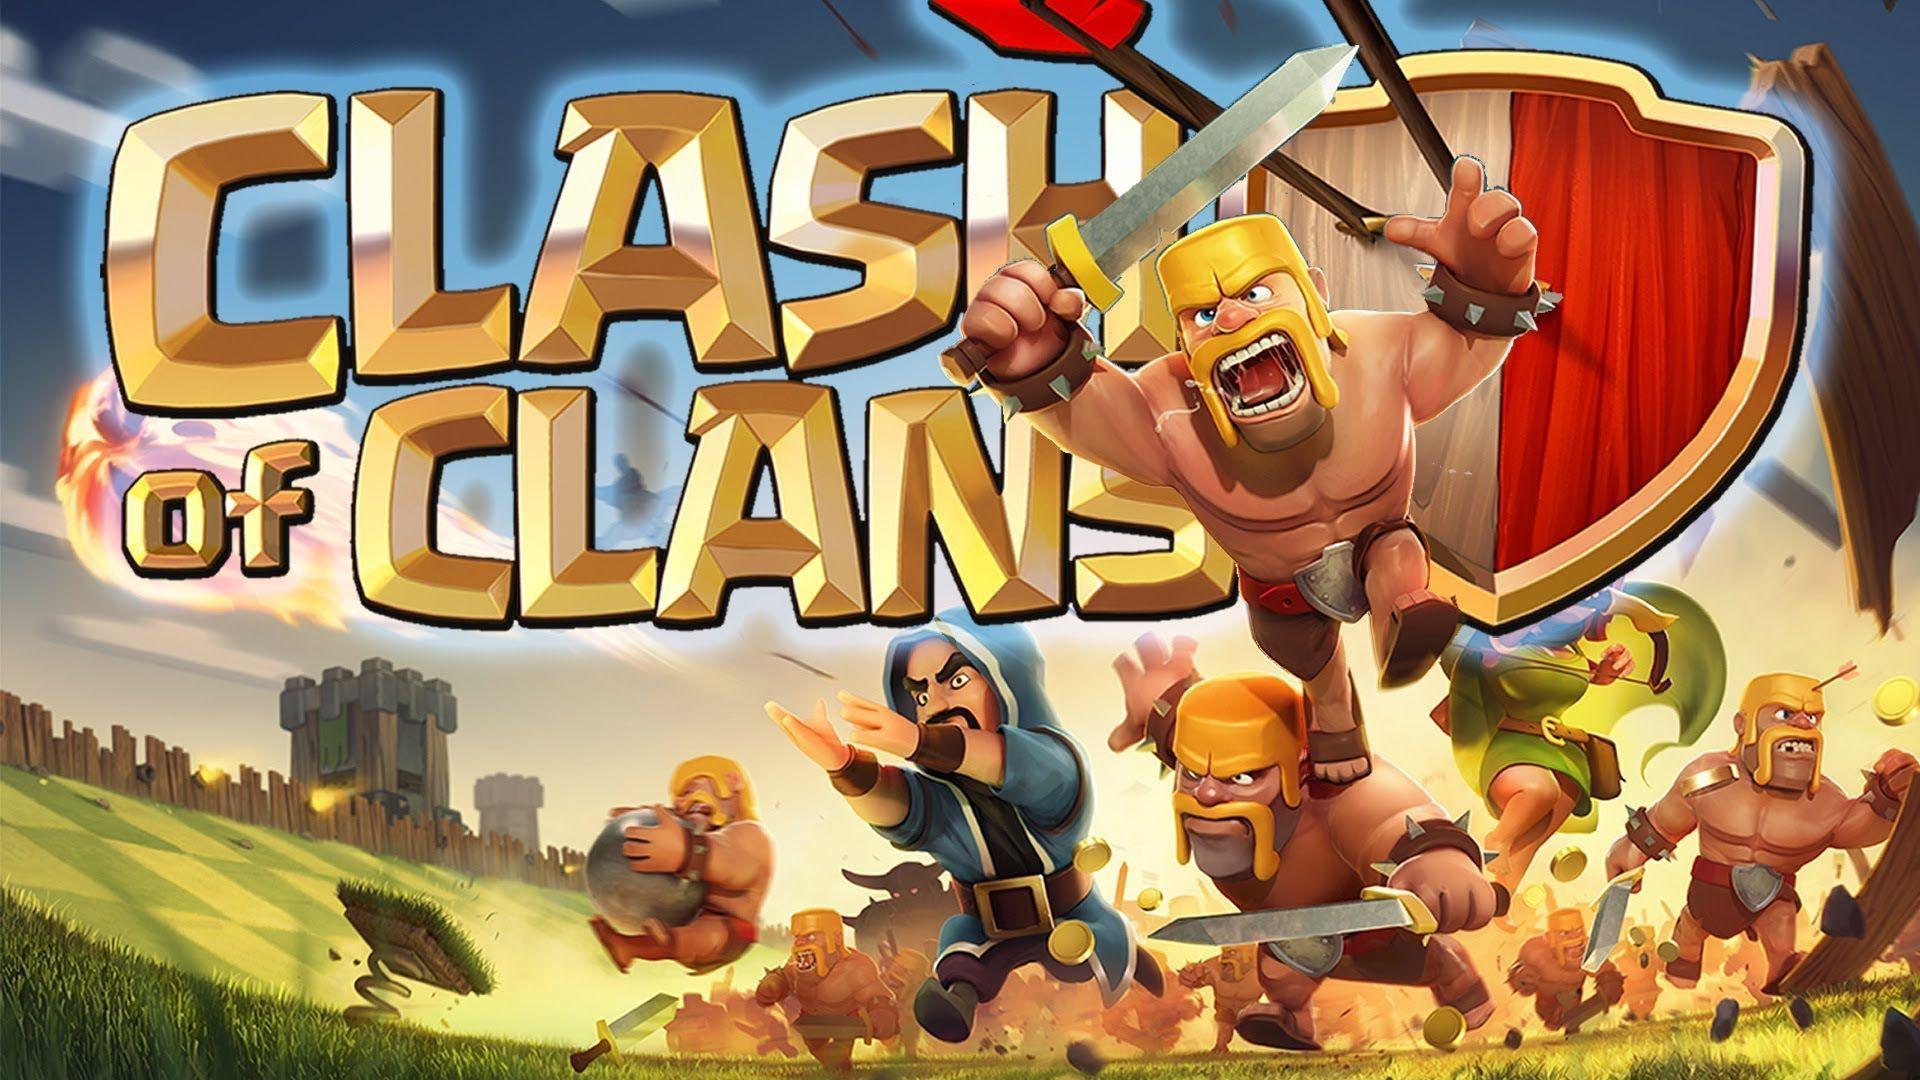 Fondos de pantalla de Clash of Clans - FondosMil